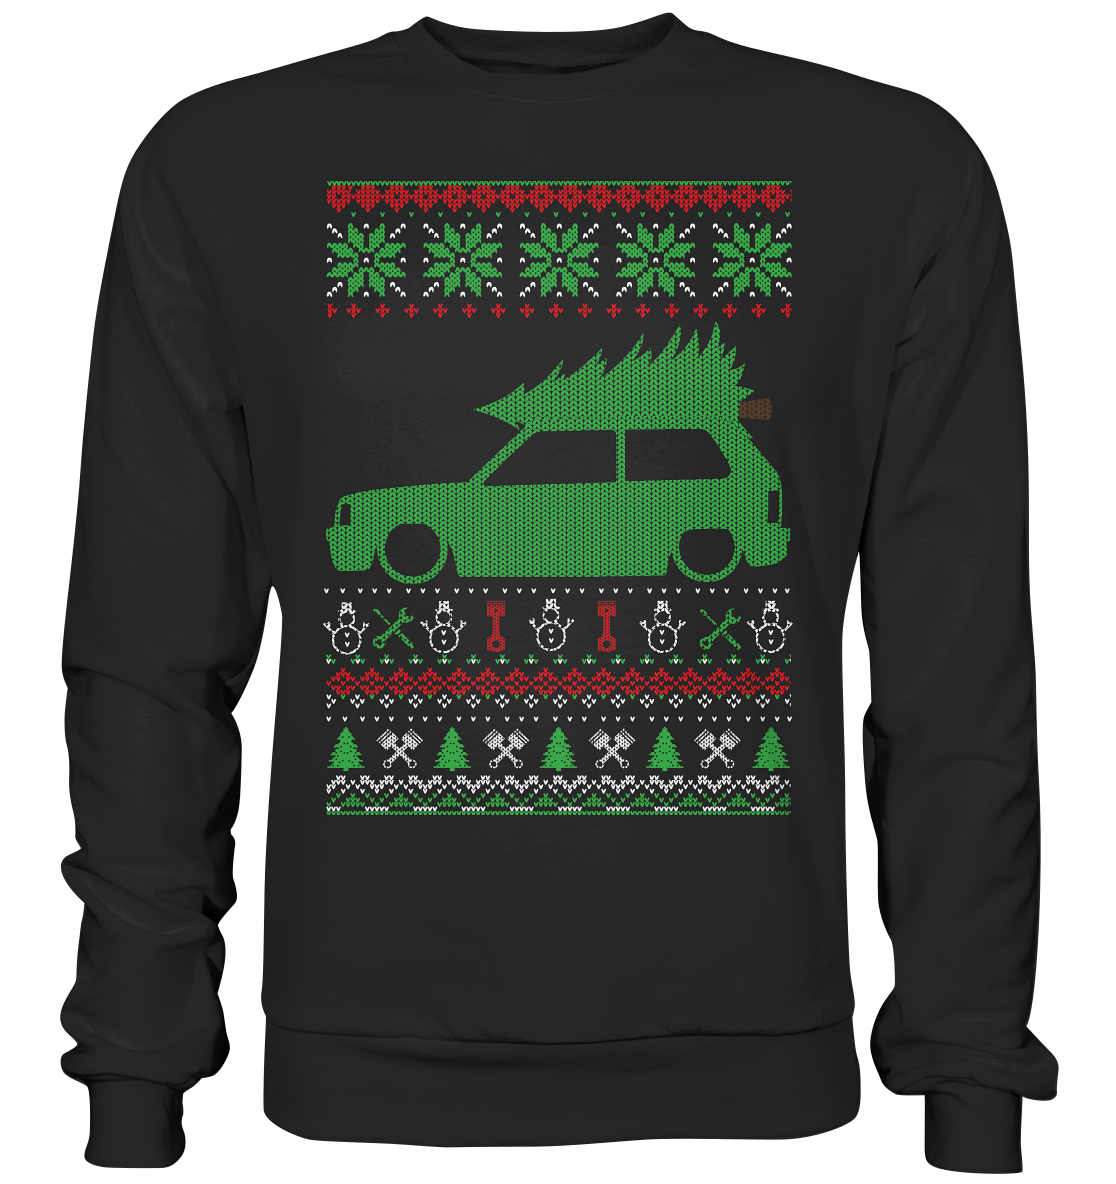 CODUGLY_FGKP141FL - Premium Sweatshirt